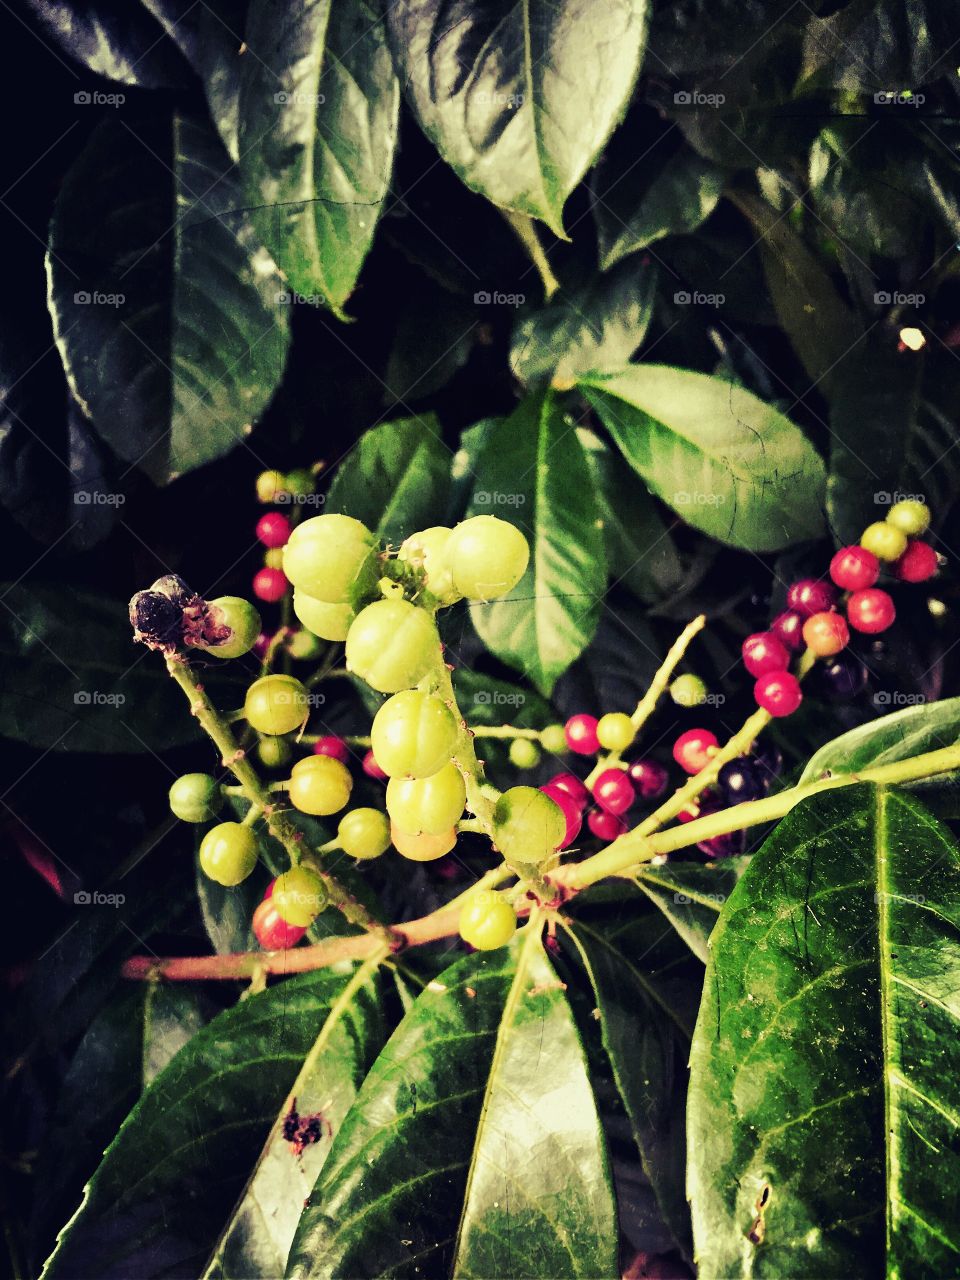 Laurel berries